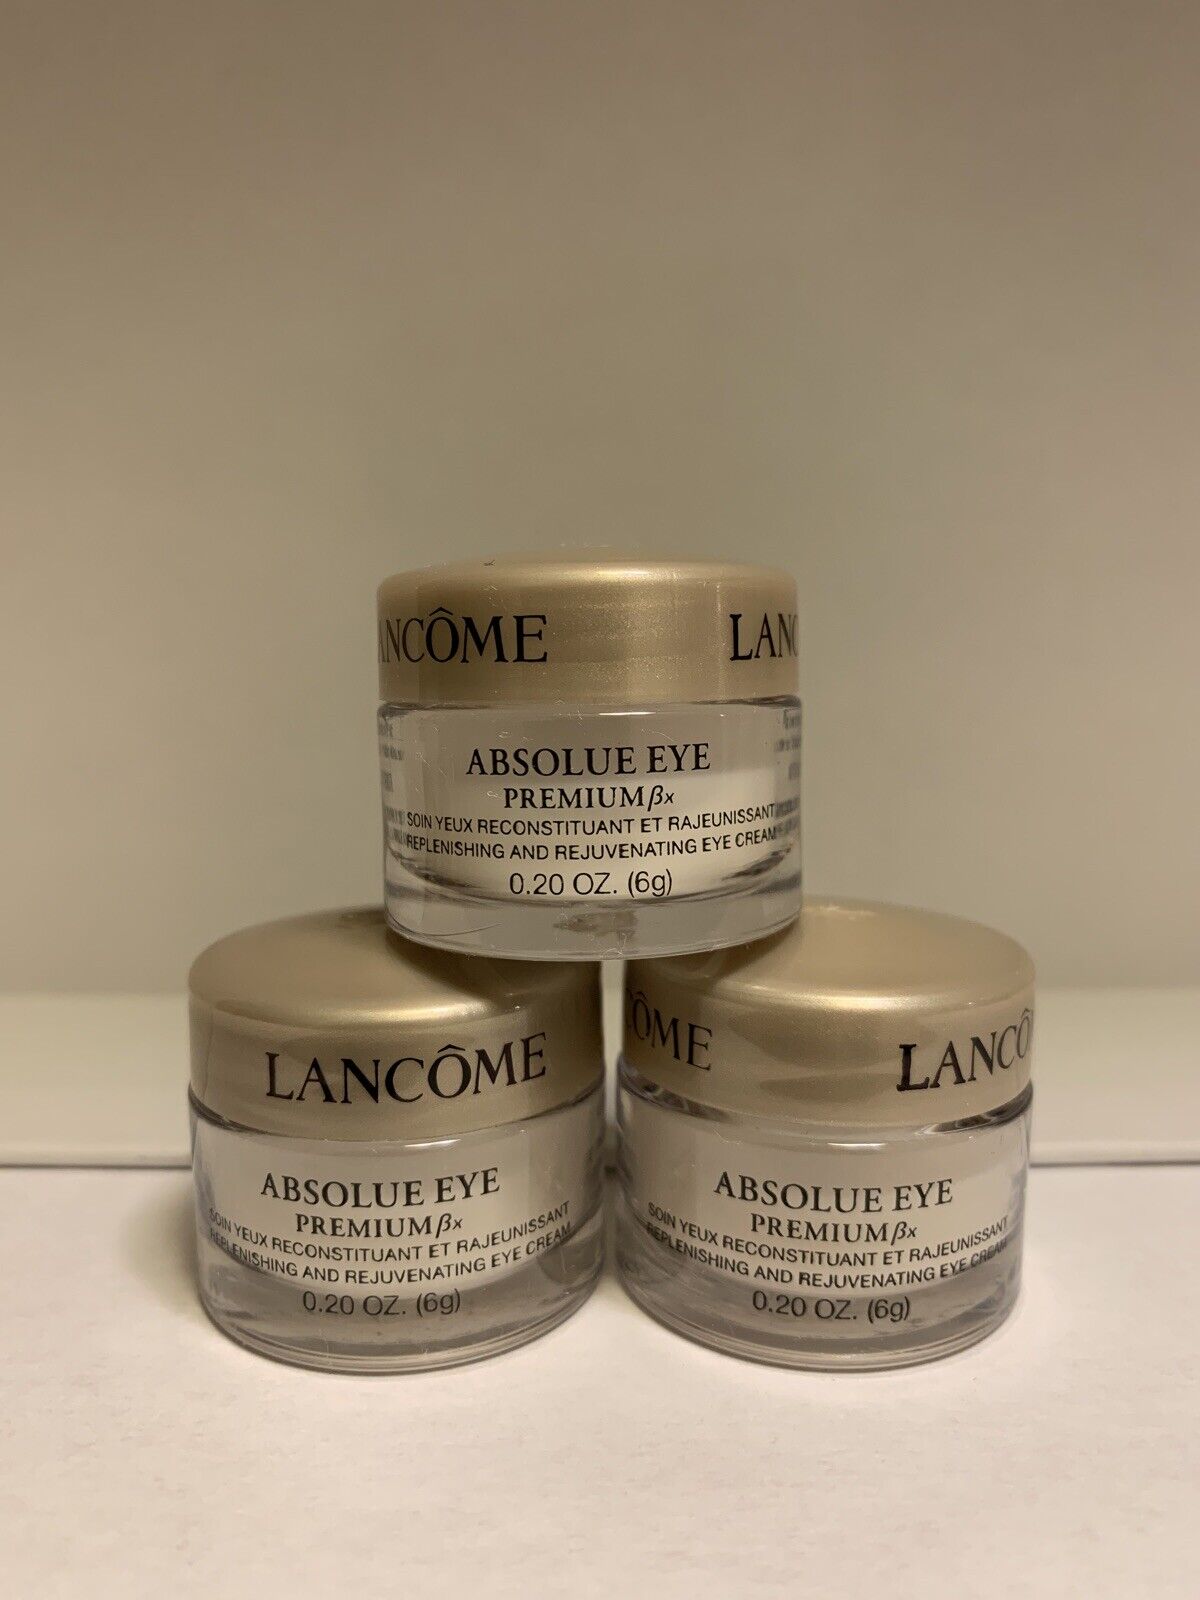 Lancome Absolue Eye Premium Bx Replenishing Eye Cream 0.2 oz/6g ea 18g total Lancôme